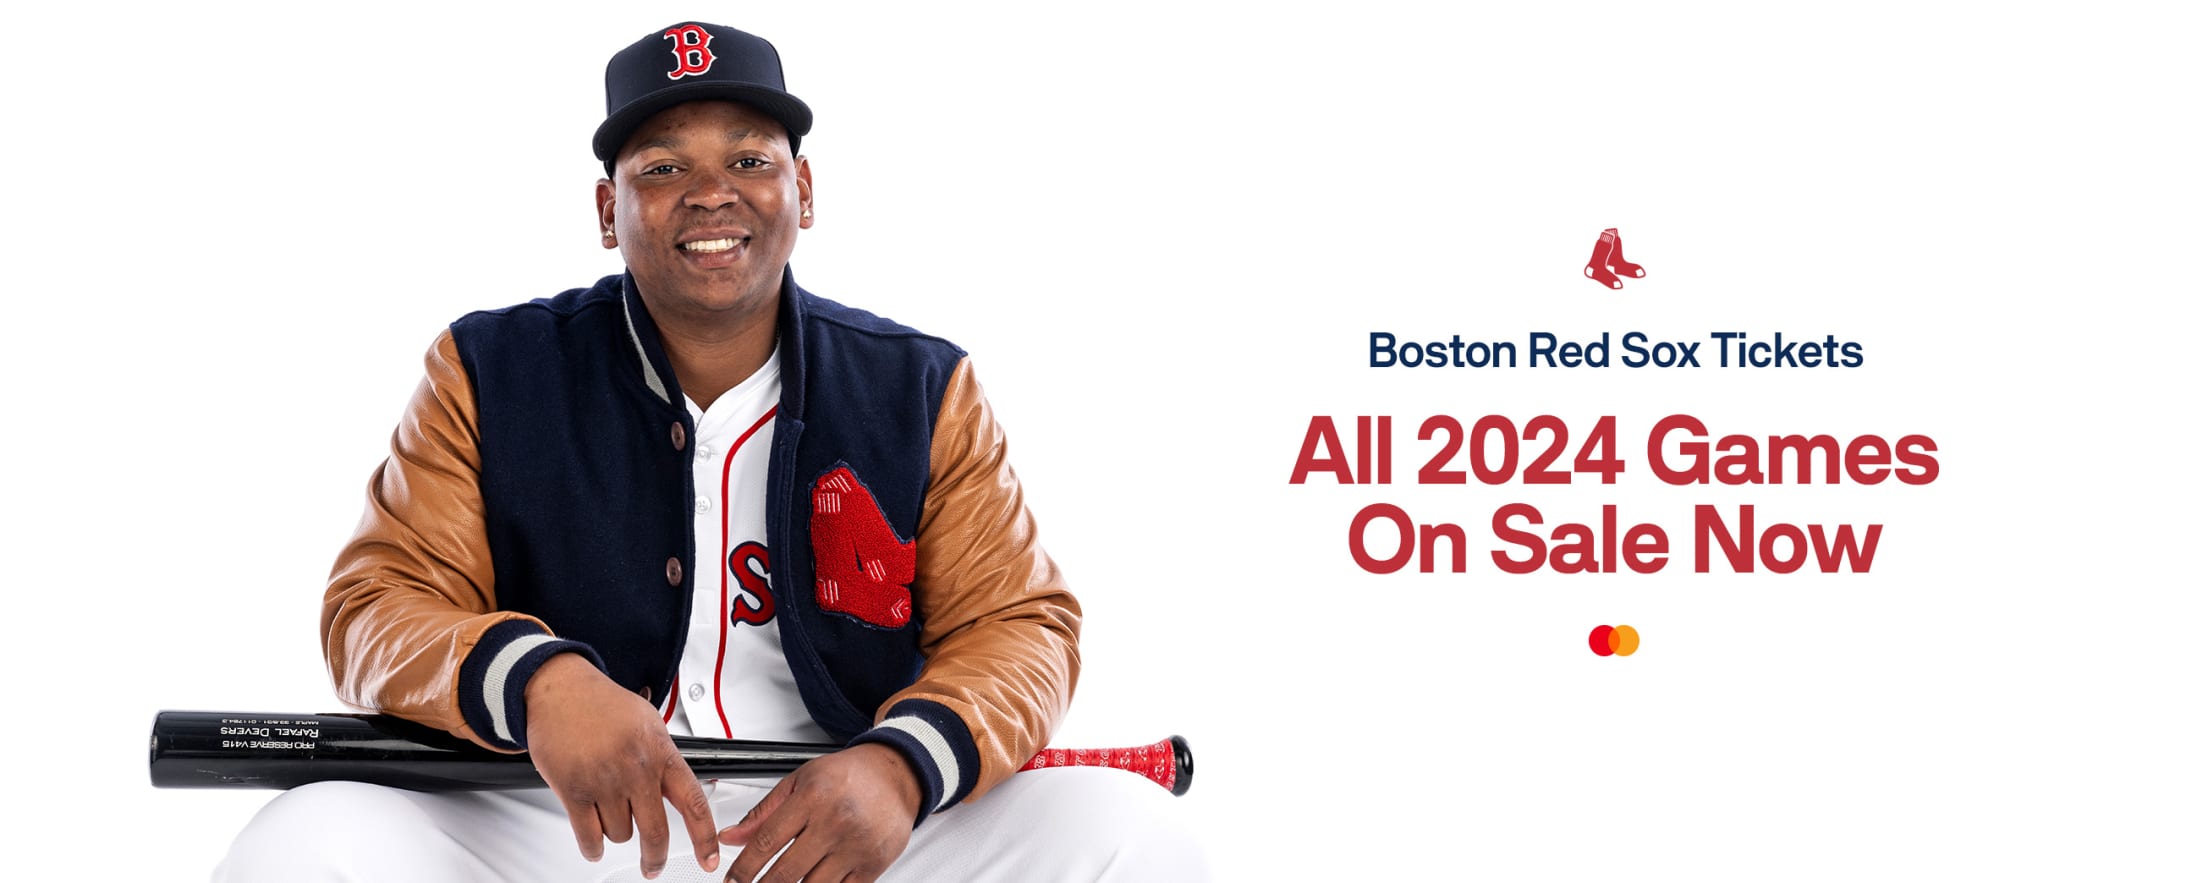 Red Sox Ticket Information Boston